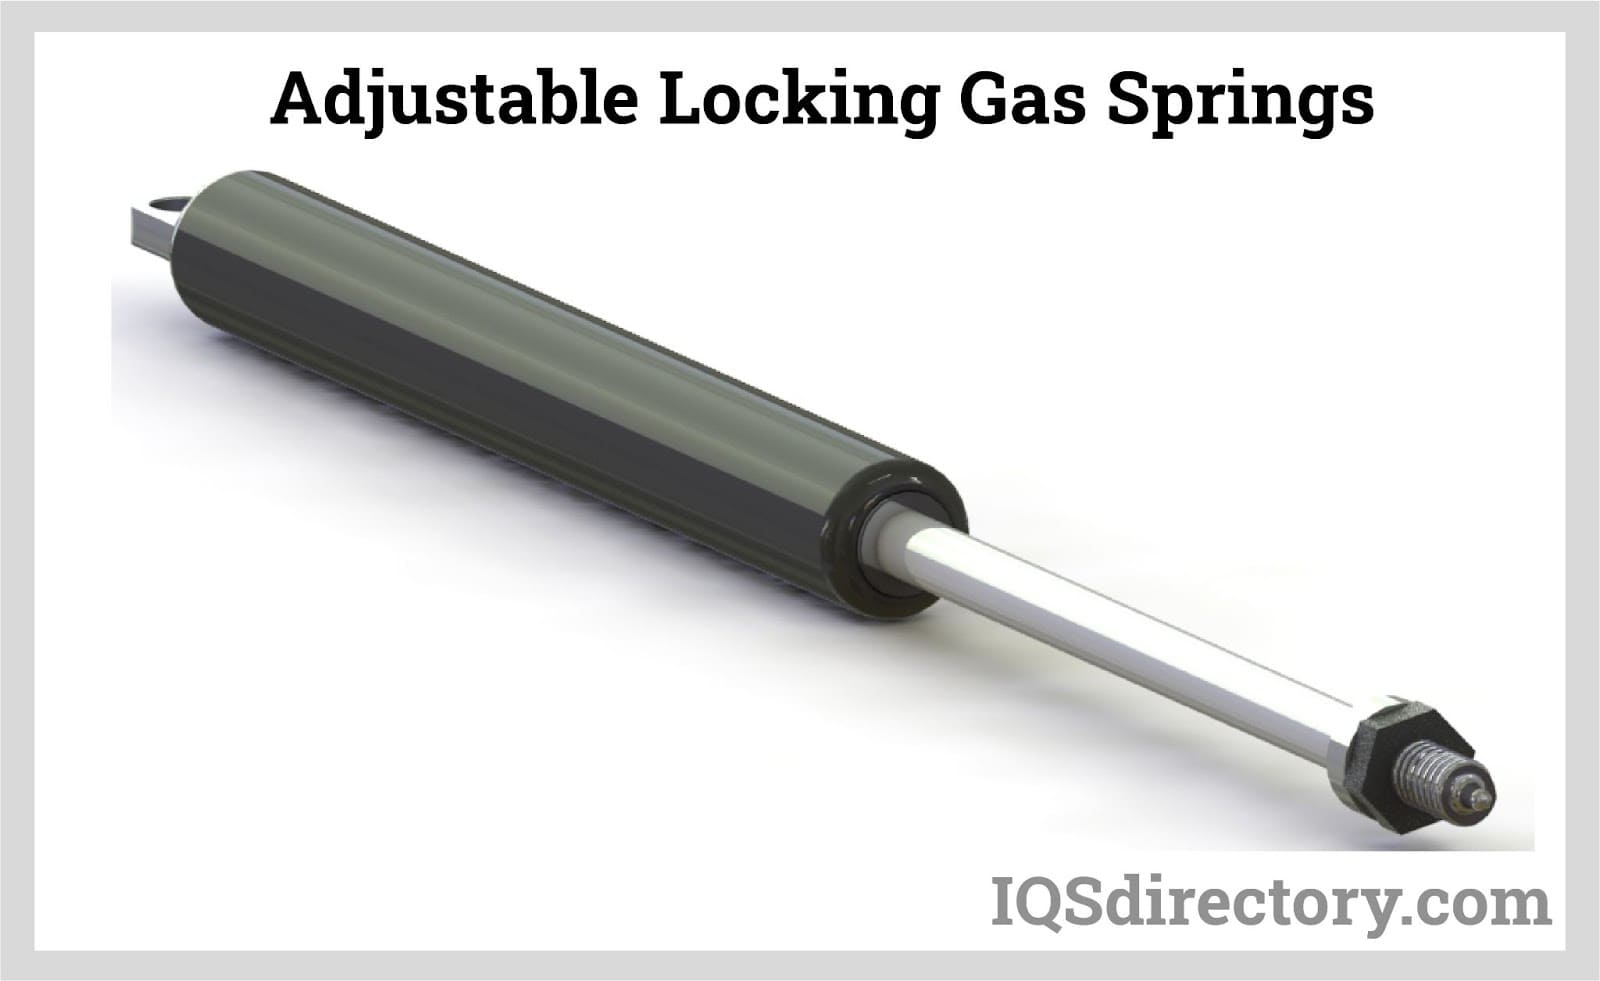 Adjustable Locking Gas Springs